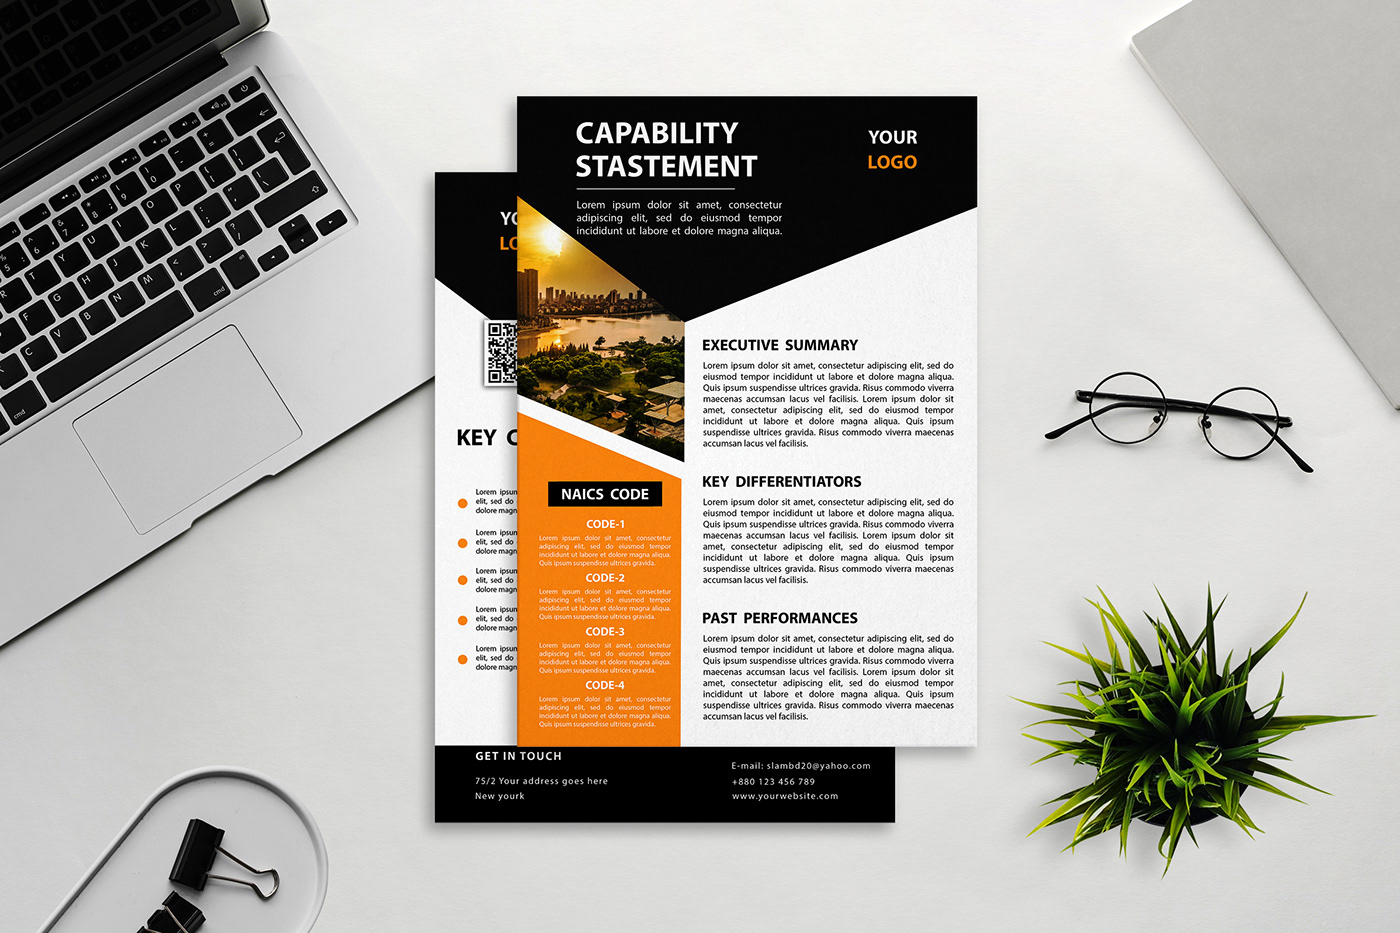 design capability statement brand identity capability capability brochure Advertising  Brand Design capabilities brochure Capability Statement idea Statements